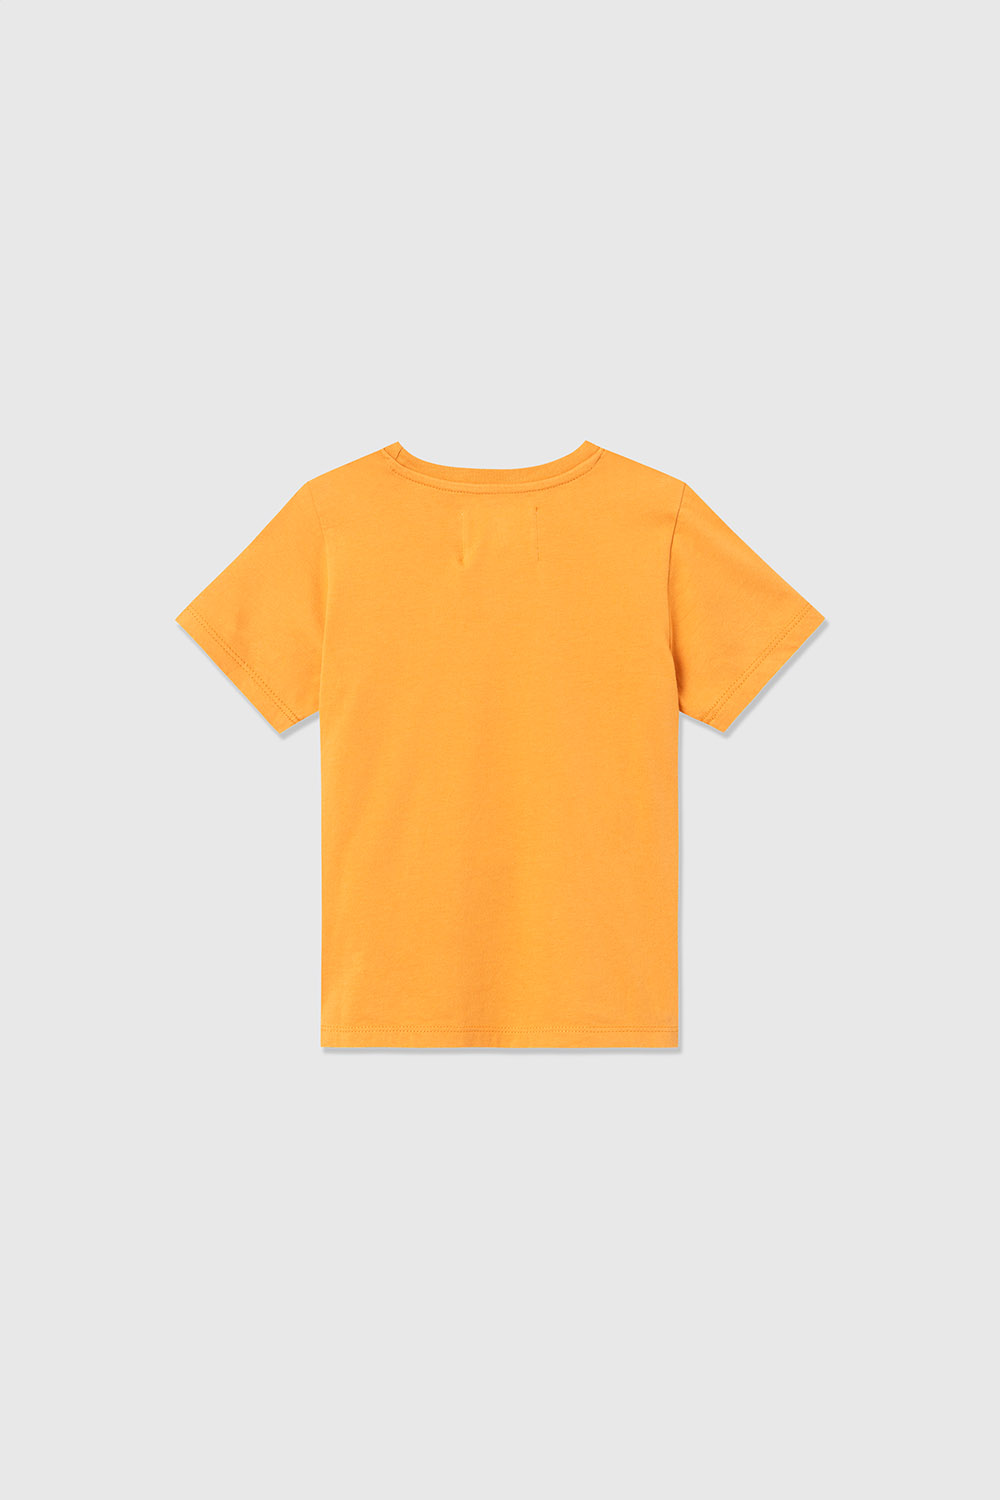 Garfield by Wood Wood Ola Kids T-shirt In love Orange | WoodWood 